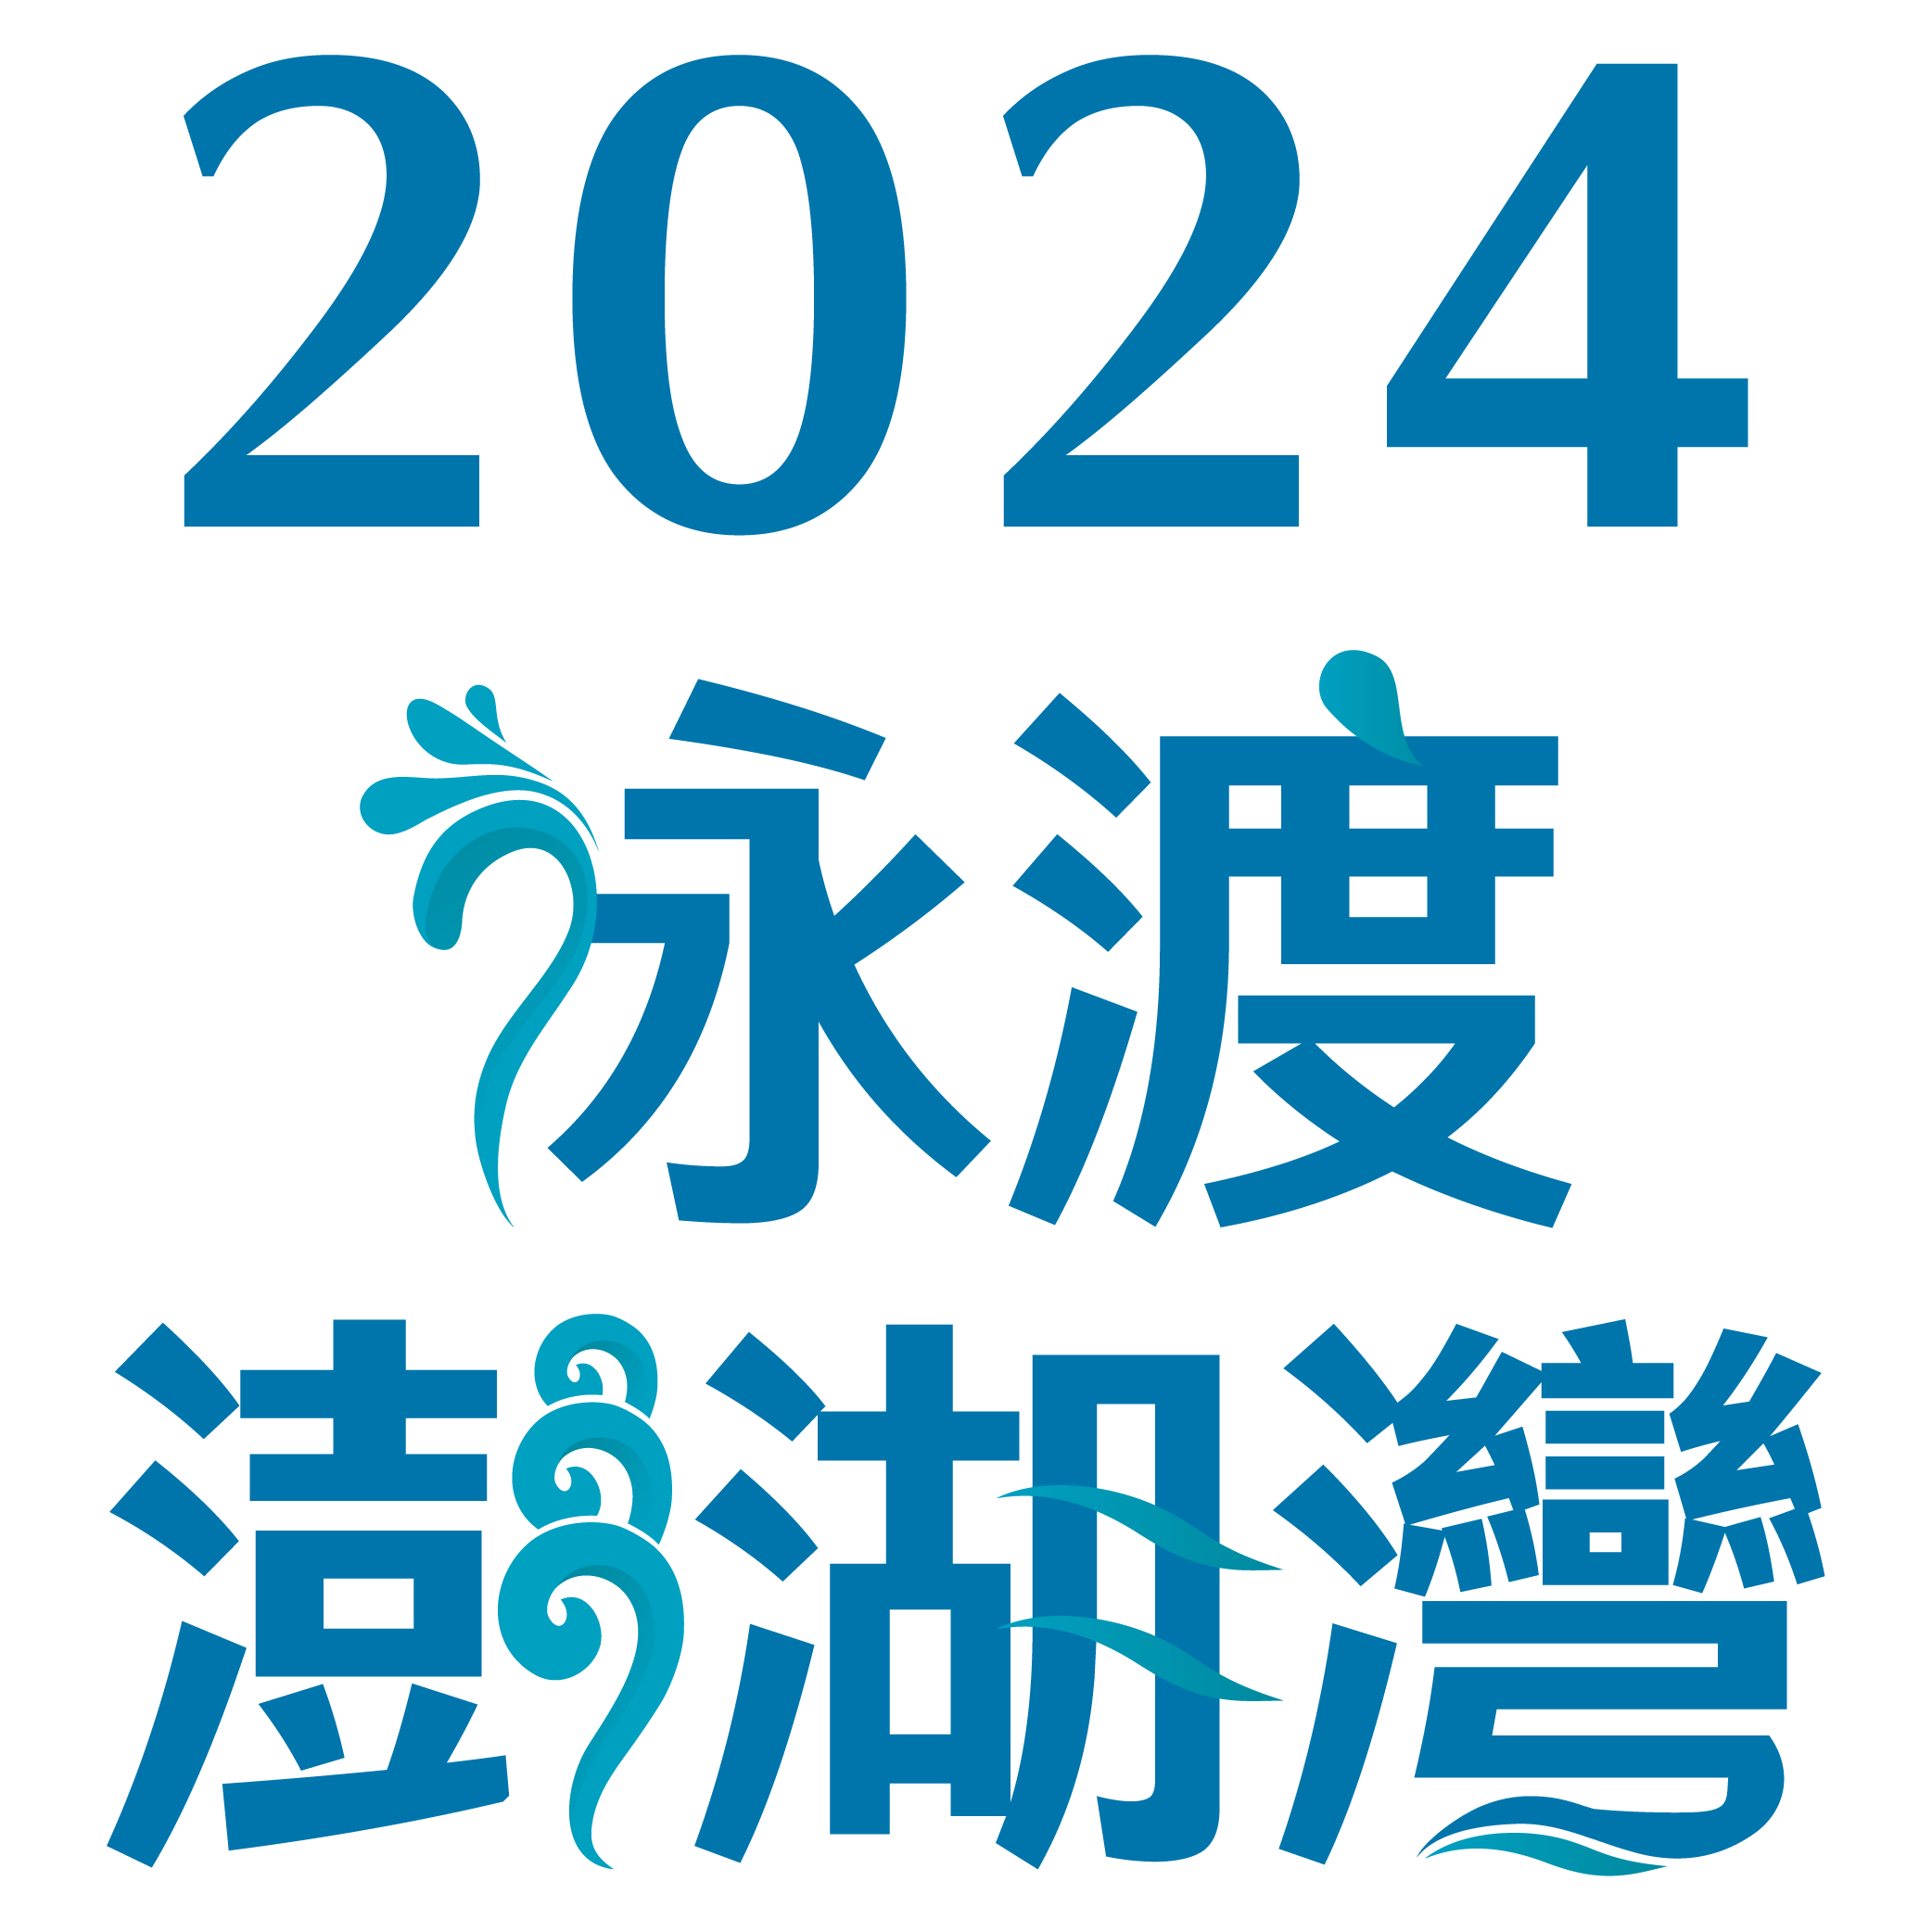 Cross Penghu Bay 泳渡澎湖灣 Logo